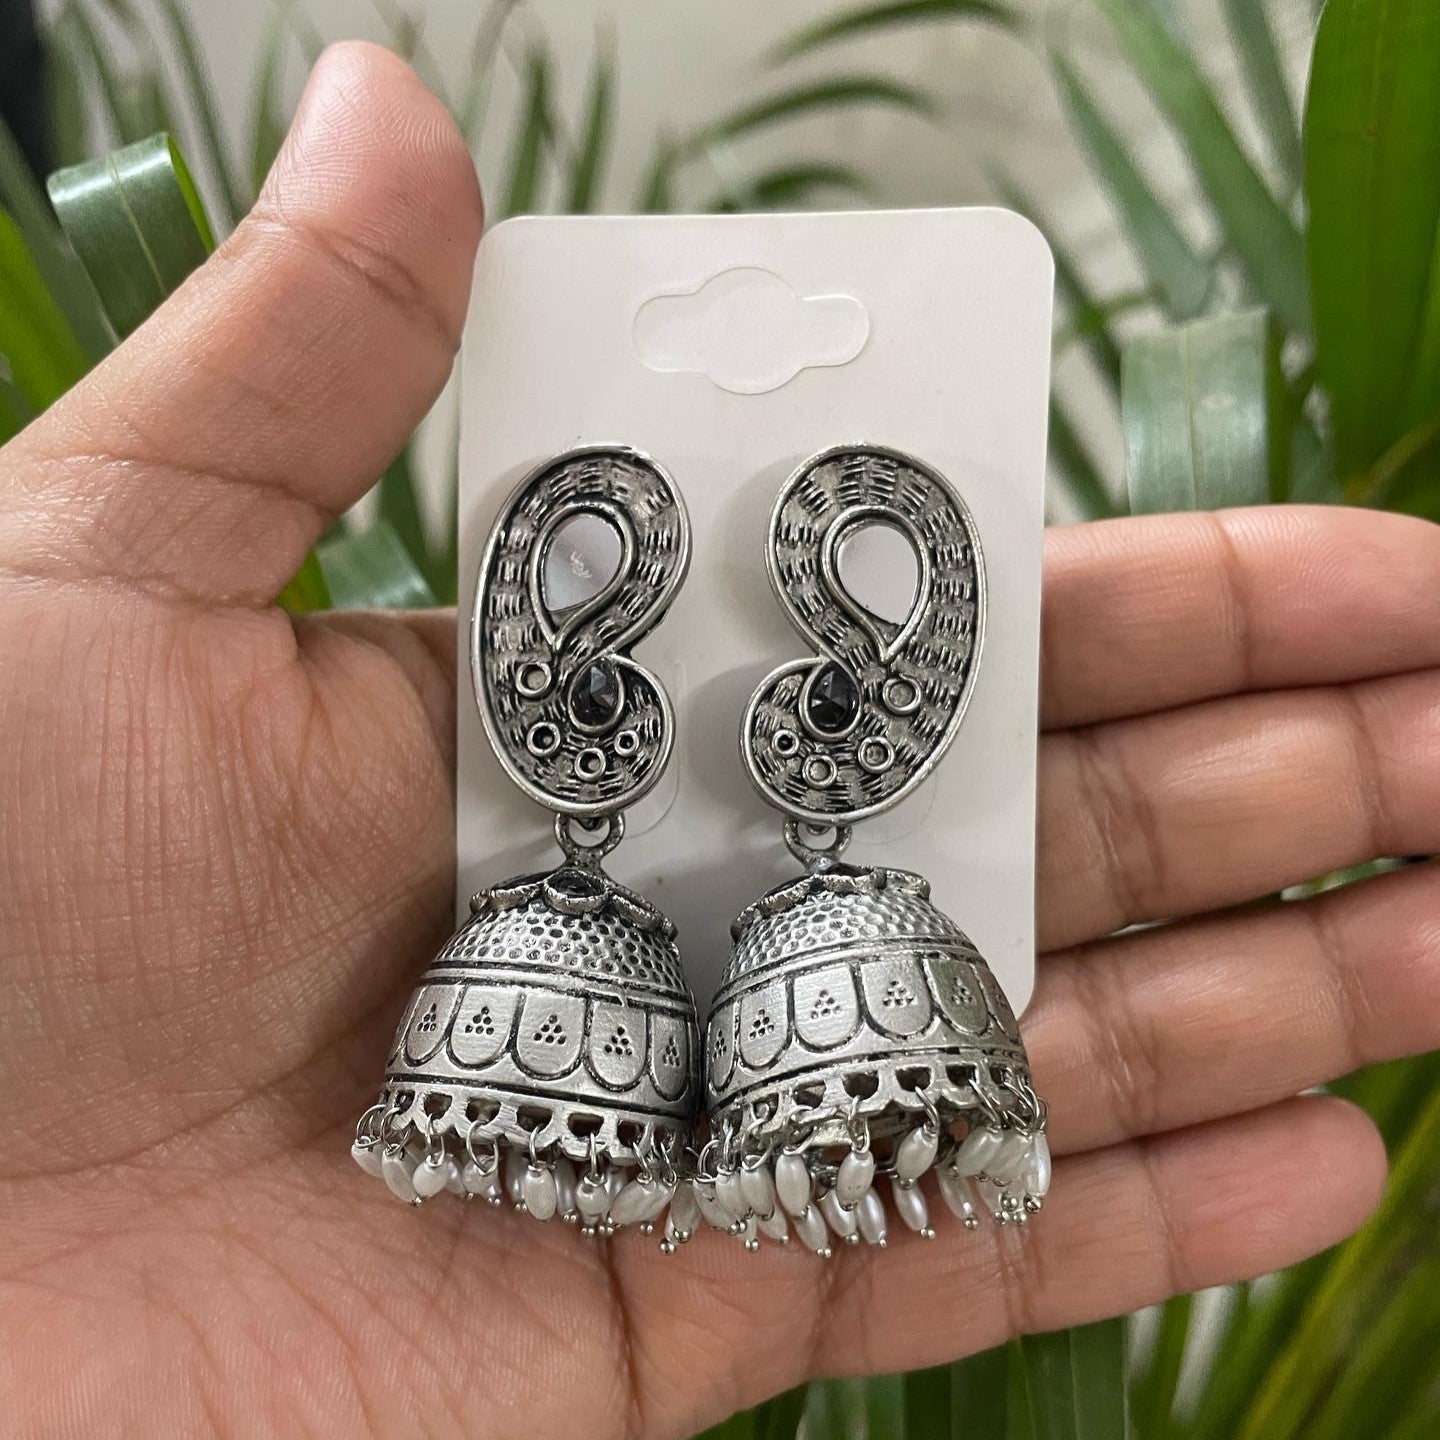 Designer Cubic Zircon Jhumki Silver Plated Clip On Earrings at Rs 1750/pair  | क्यूबिक जिरकोनिया इयररिंग in Jalandhar | ID: 3910585073